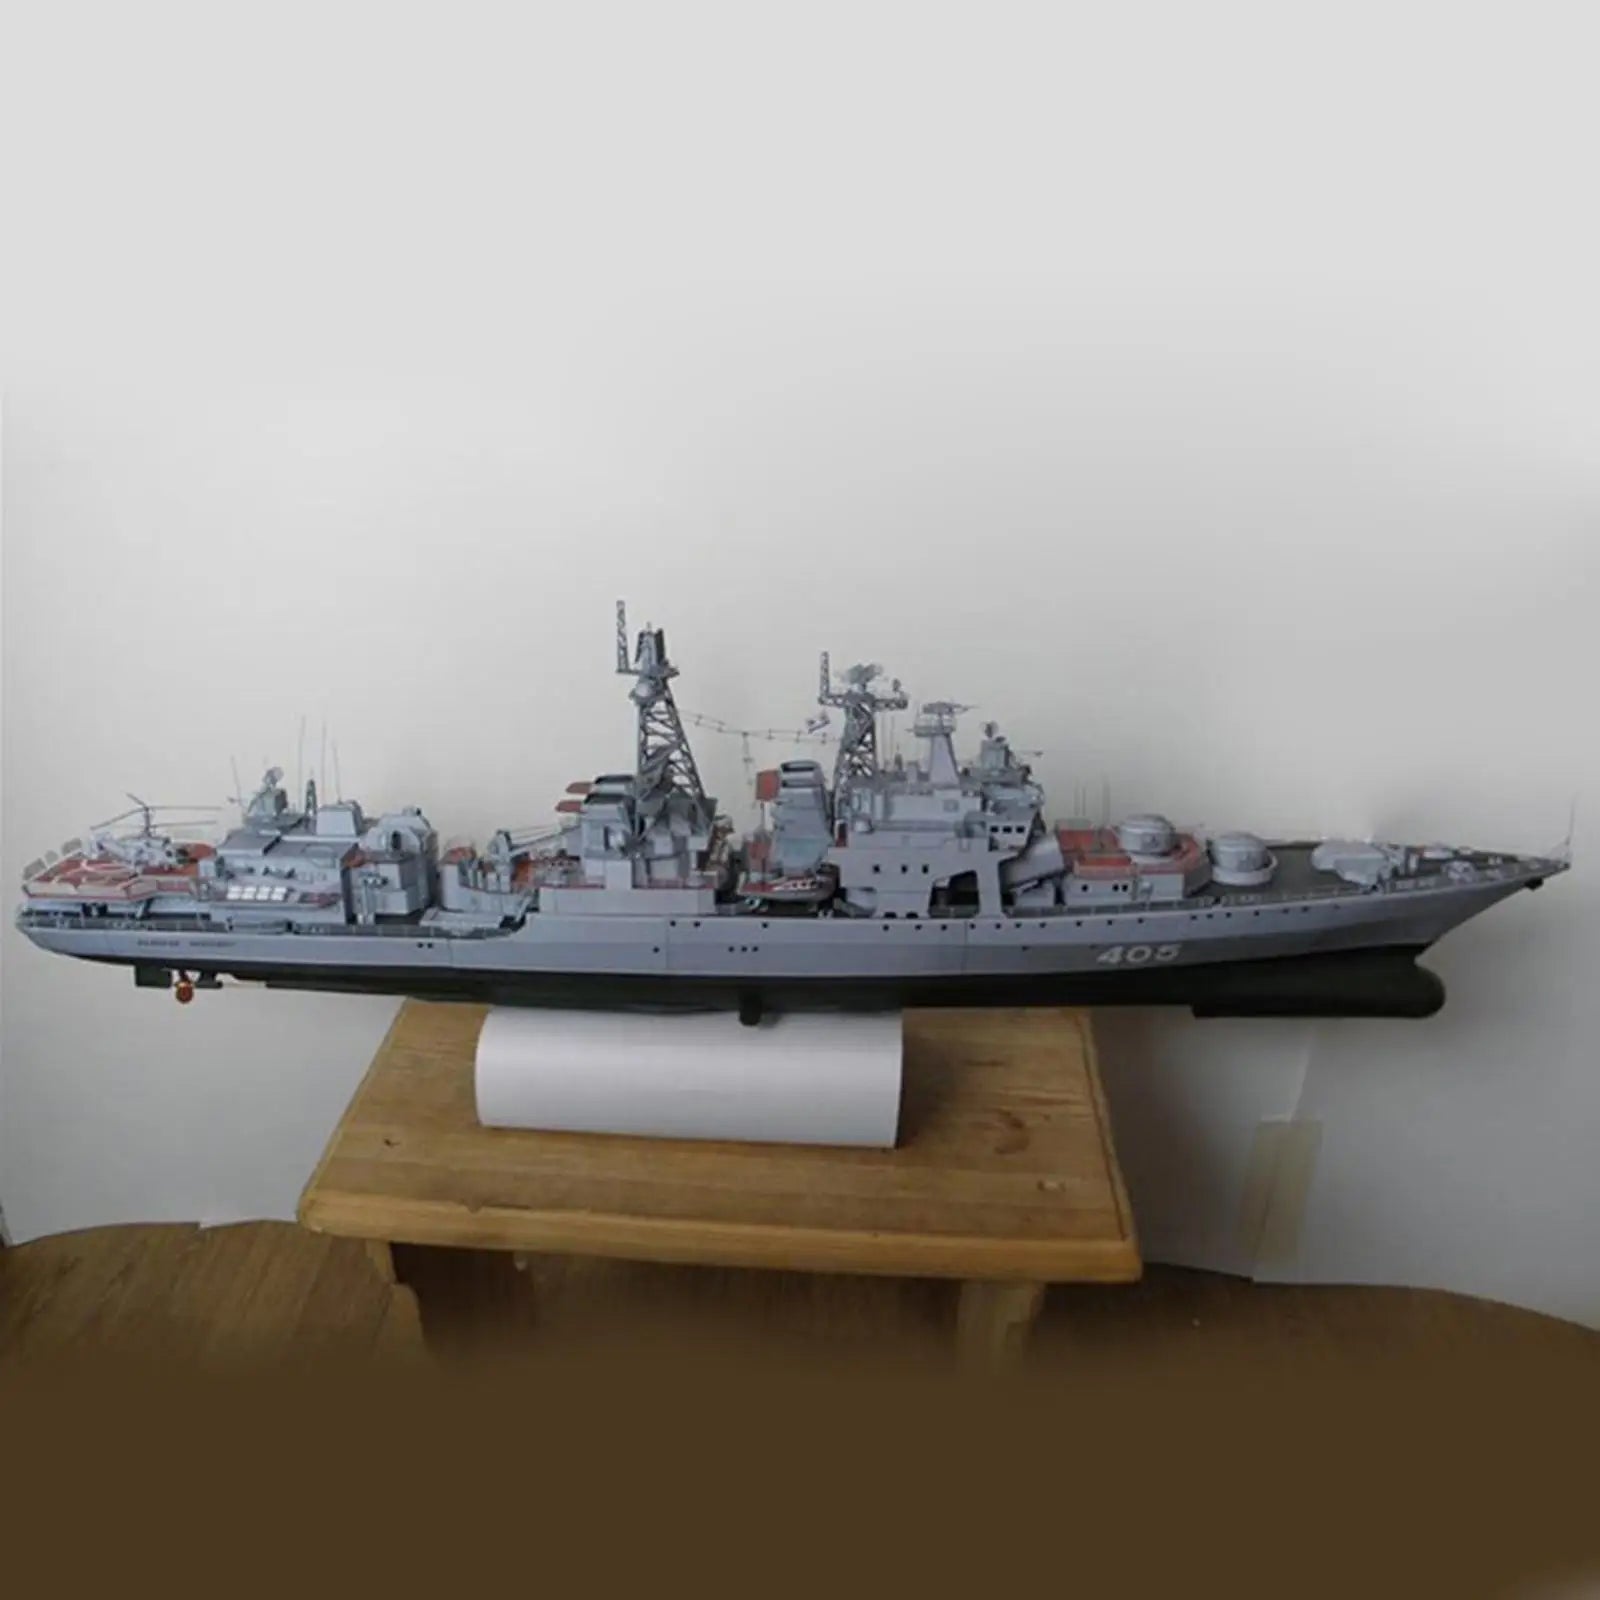 1/200 Scale Russian Levchenko Navy Ship 3D Paper Model Kit by Sunnimix